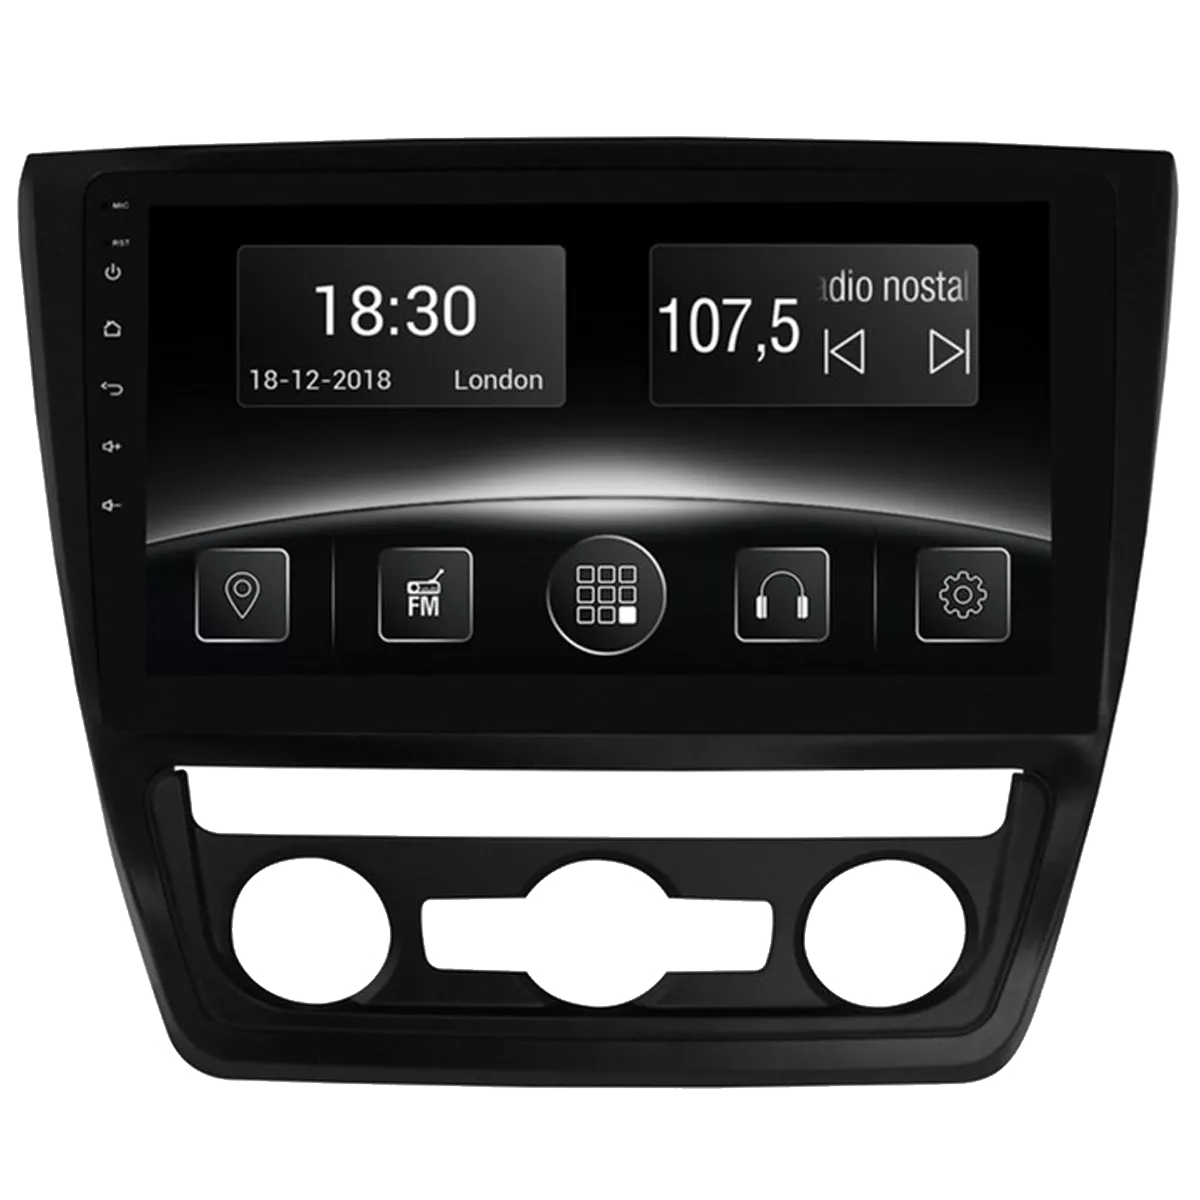 Gazer CM5510-5LA Мультимедийная автомобильная система для Skoda Yeti (5L) auto conditioner 2009-13